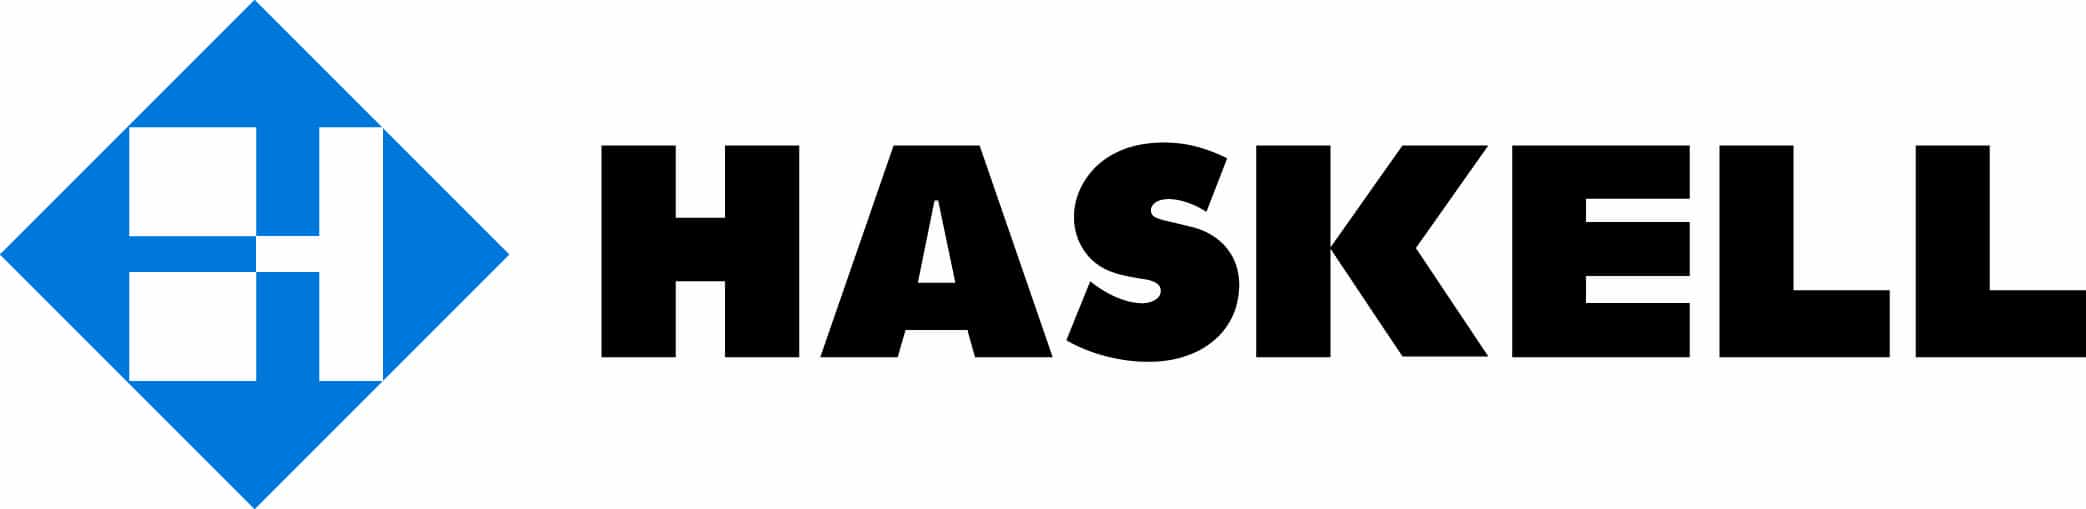 Haskell_Logo